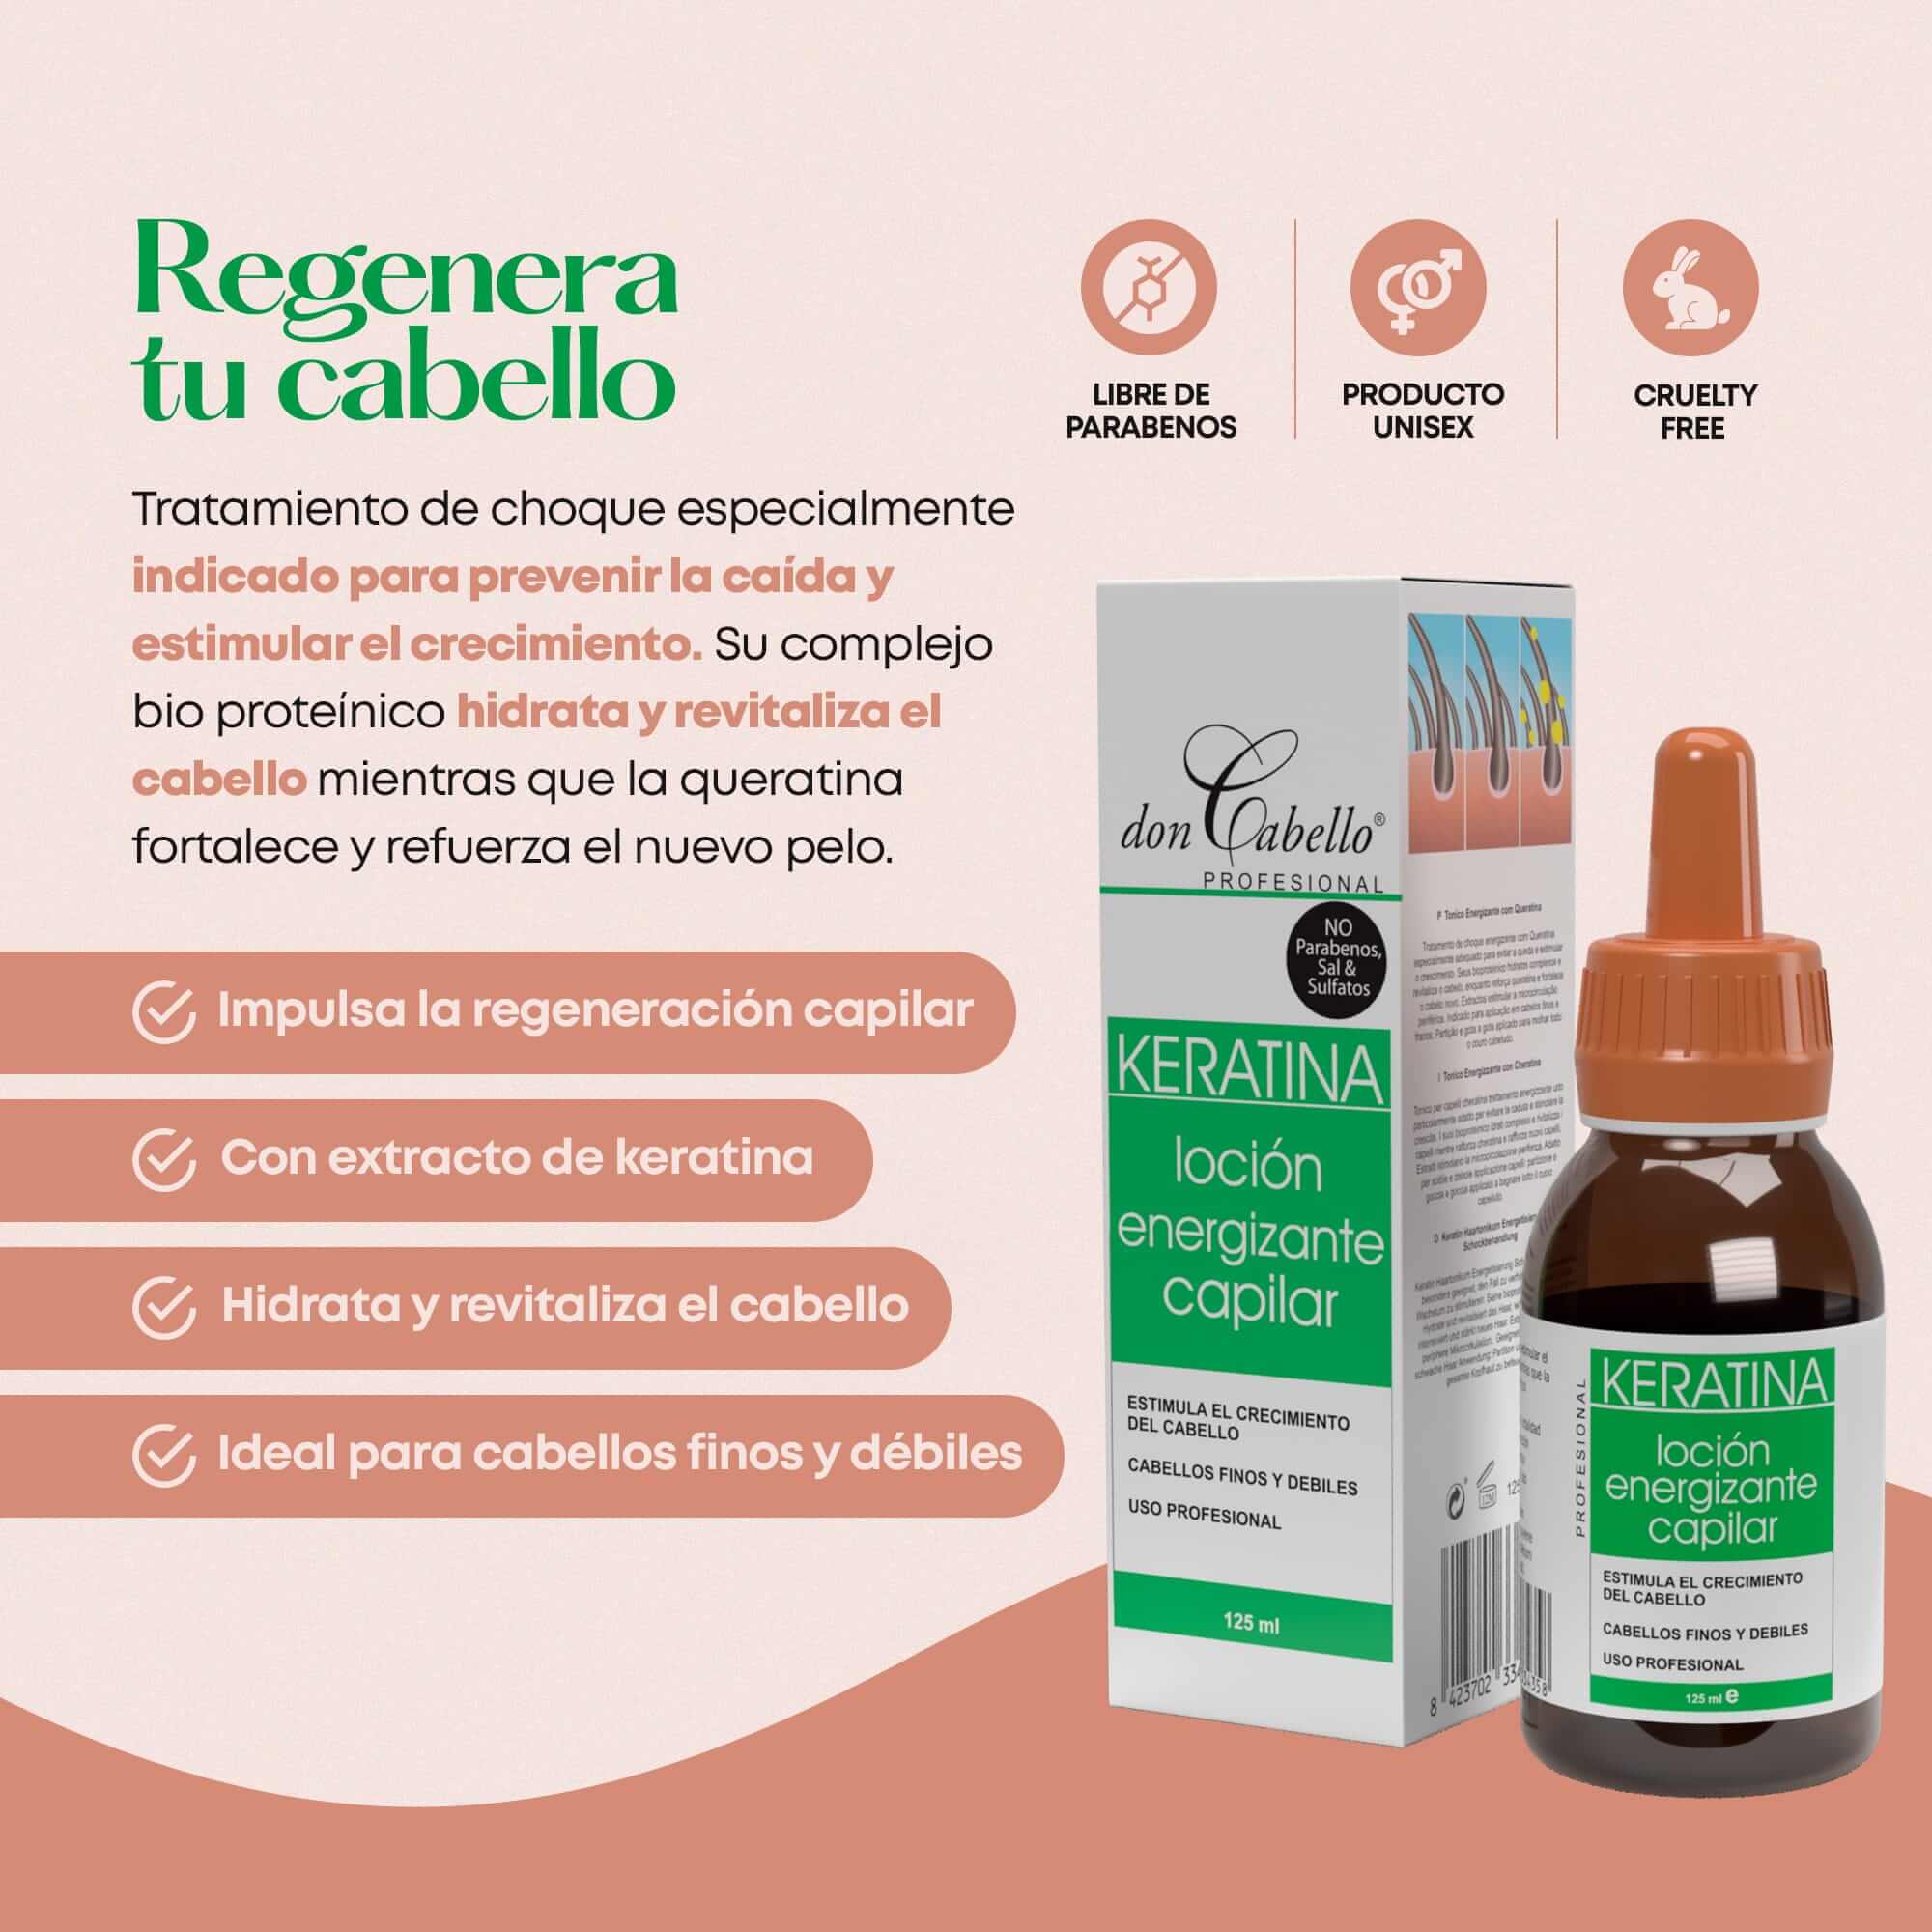 Don Cabello Sérum regenerador capilar, Tónico crecimiento del cabello 125 ml - Cosmetics Afro Latino